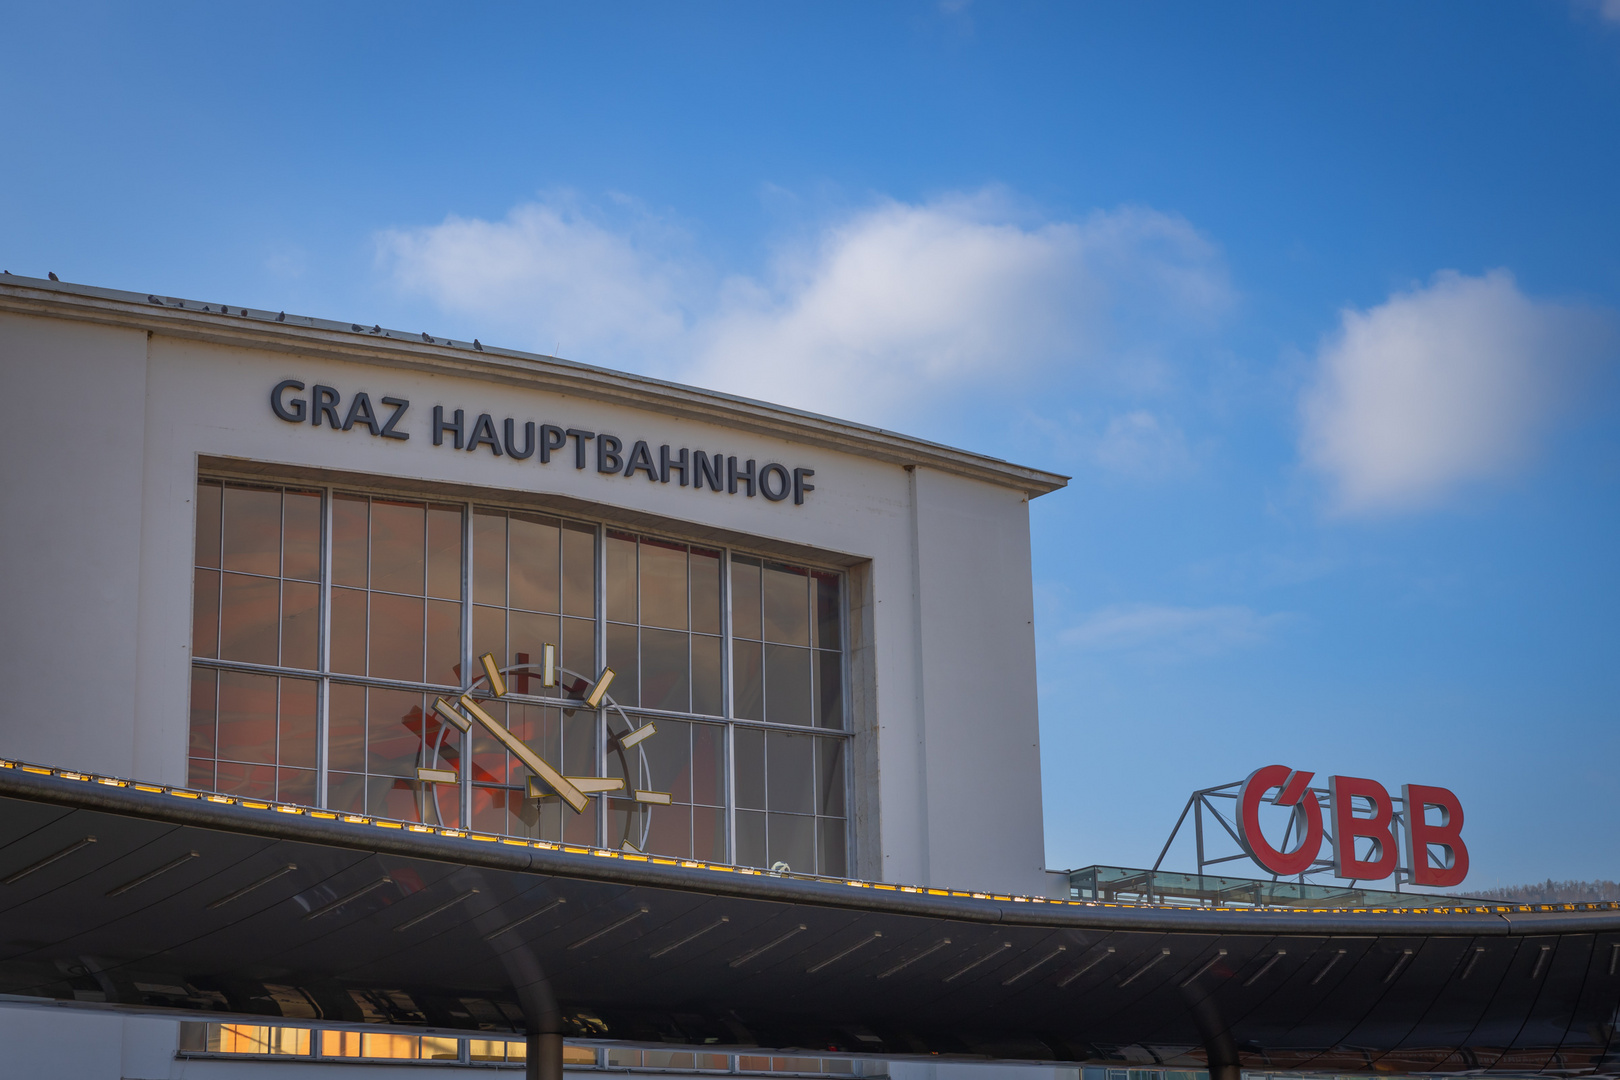 Graz Hauptbahnhof